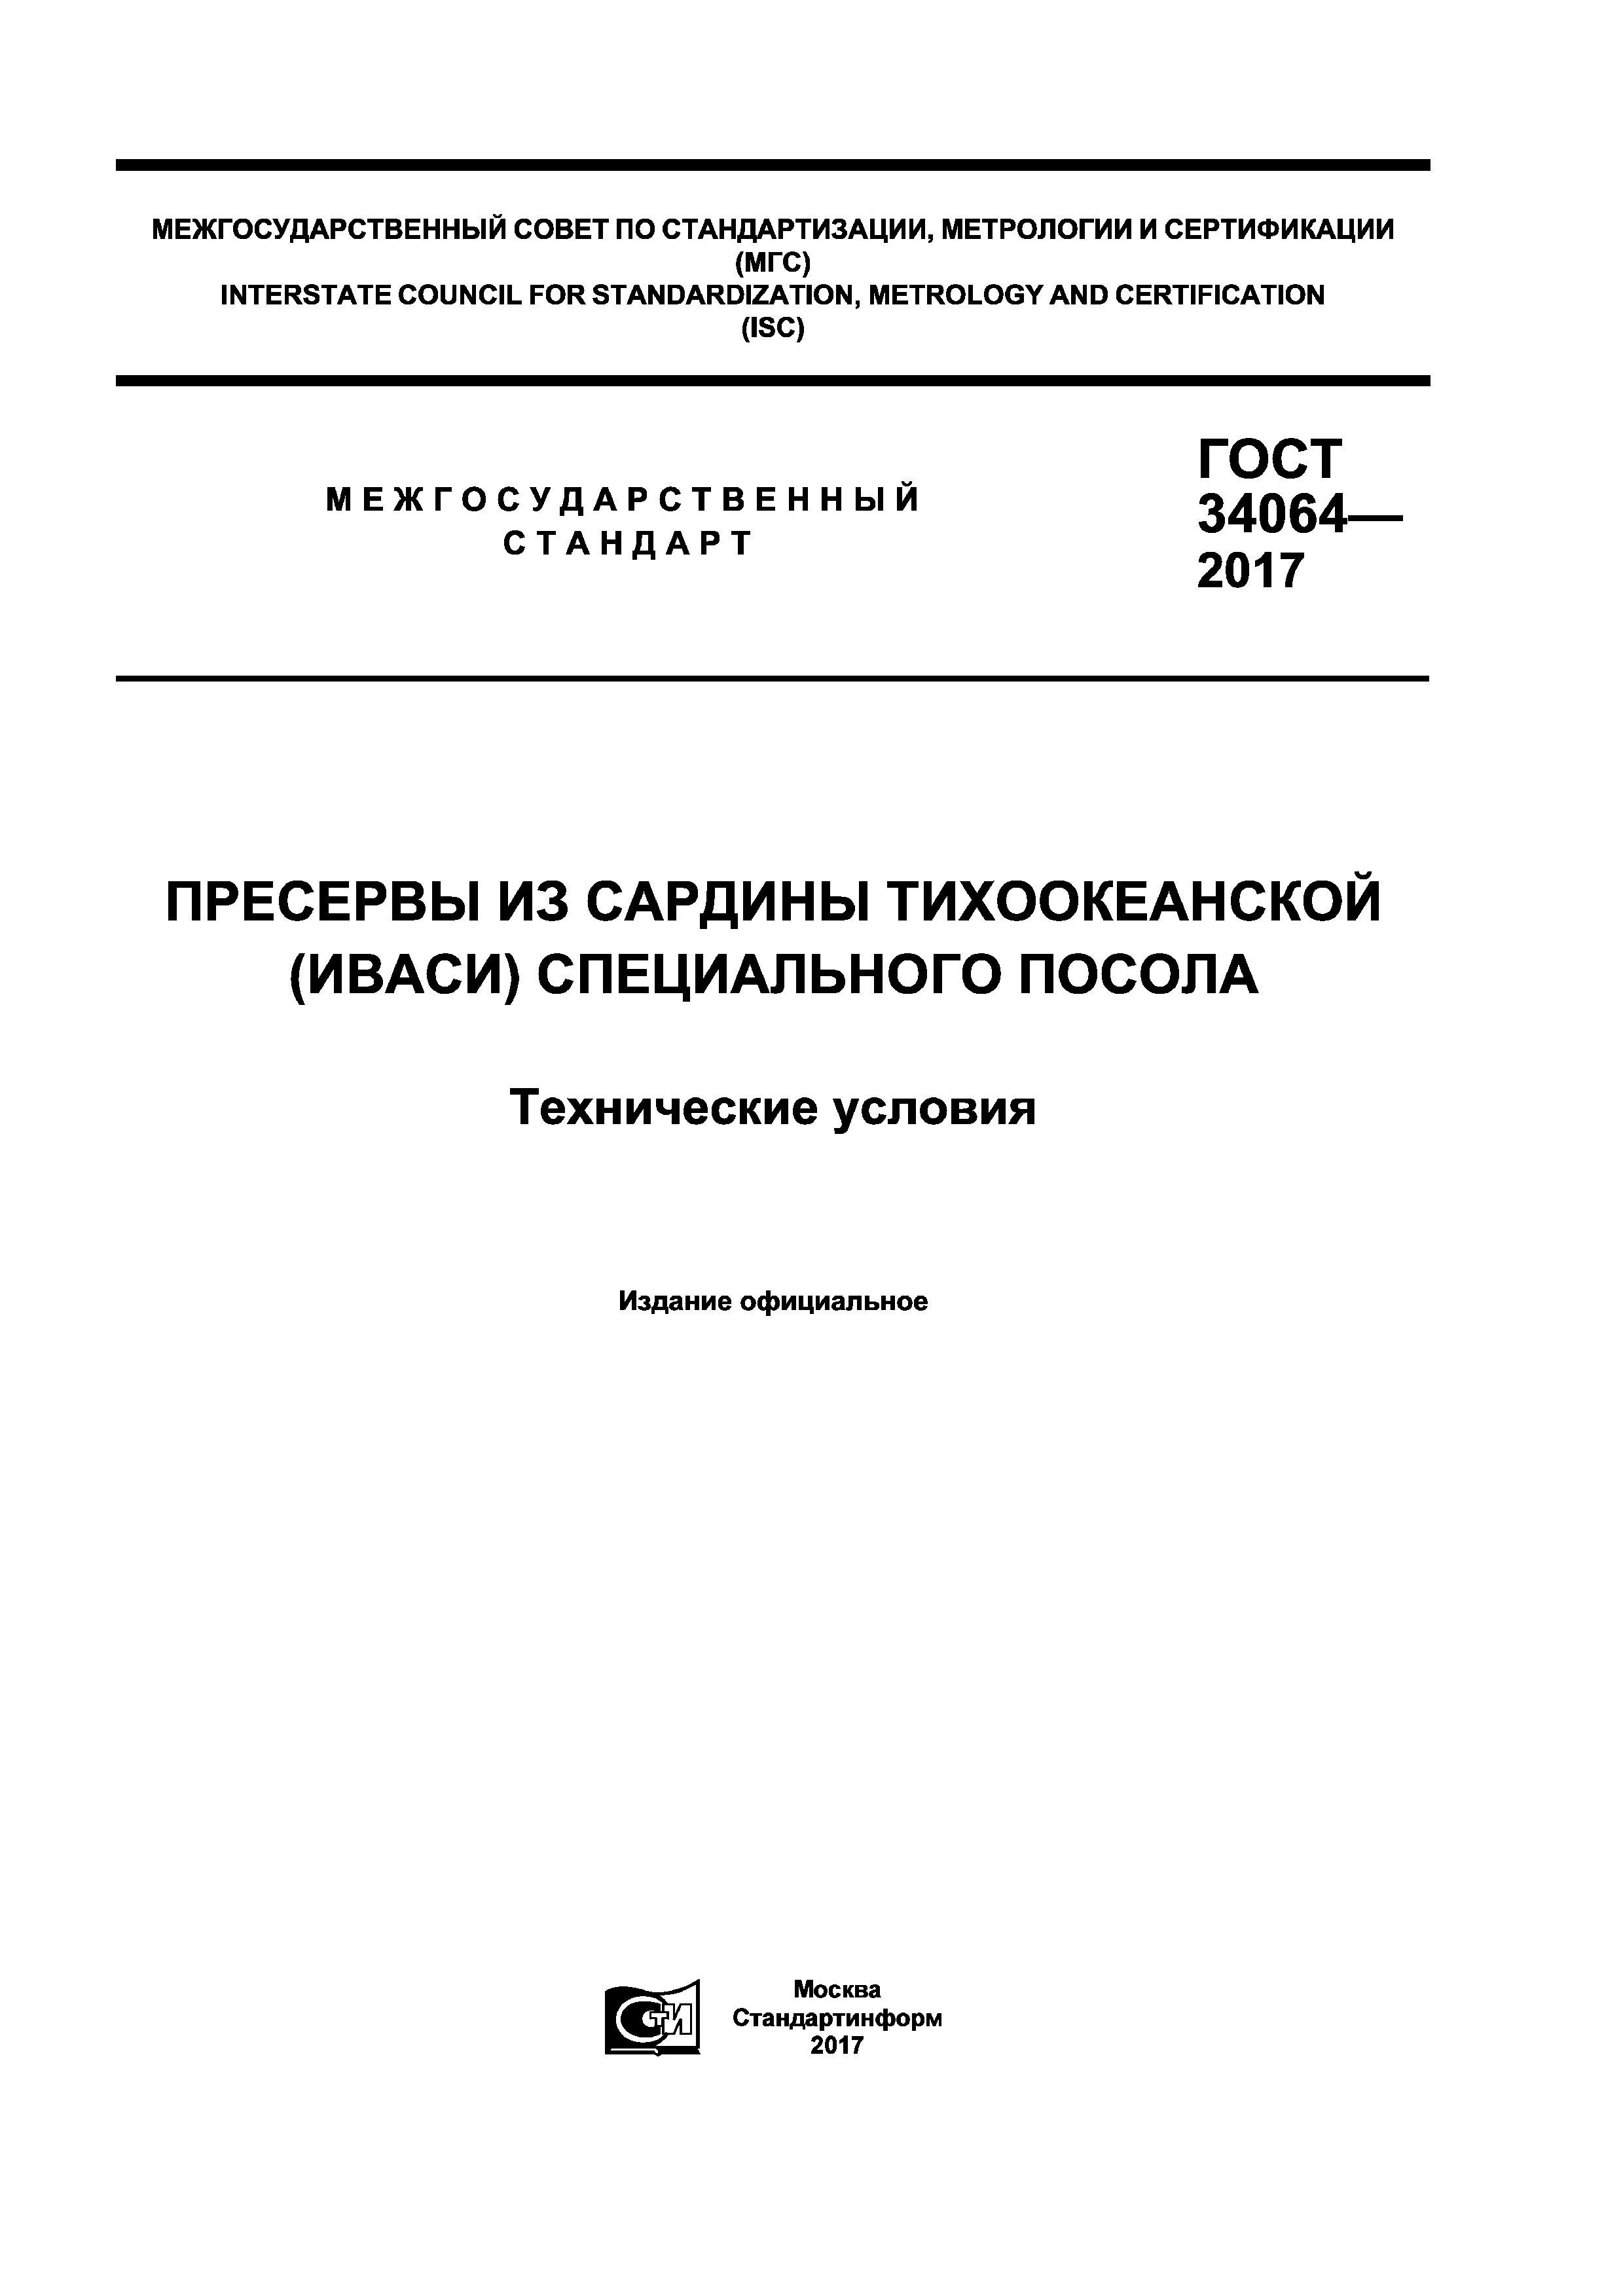 ГОСТ 34064-2017